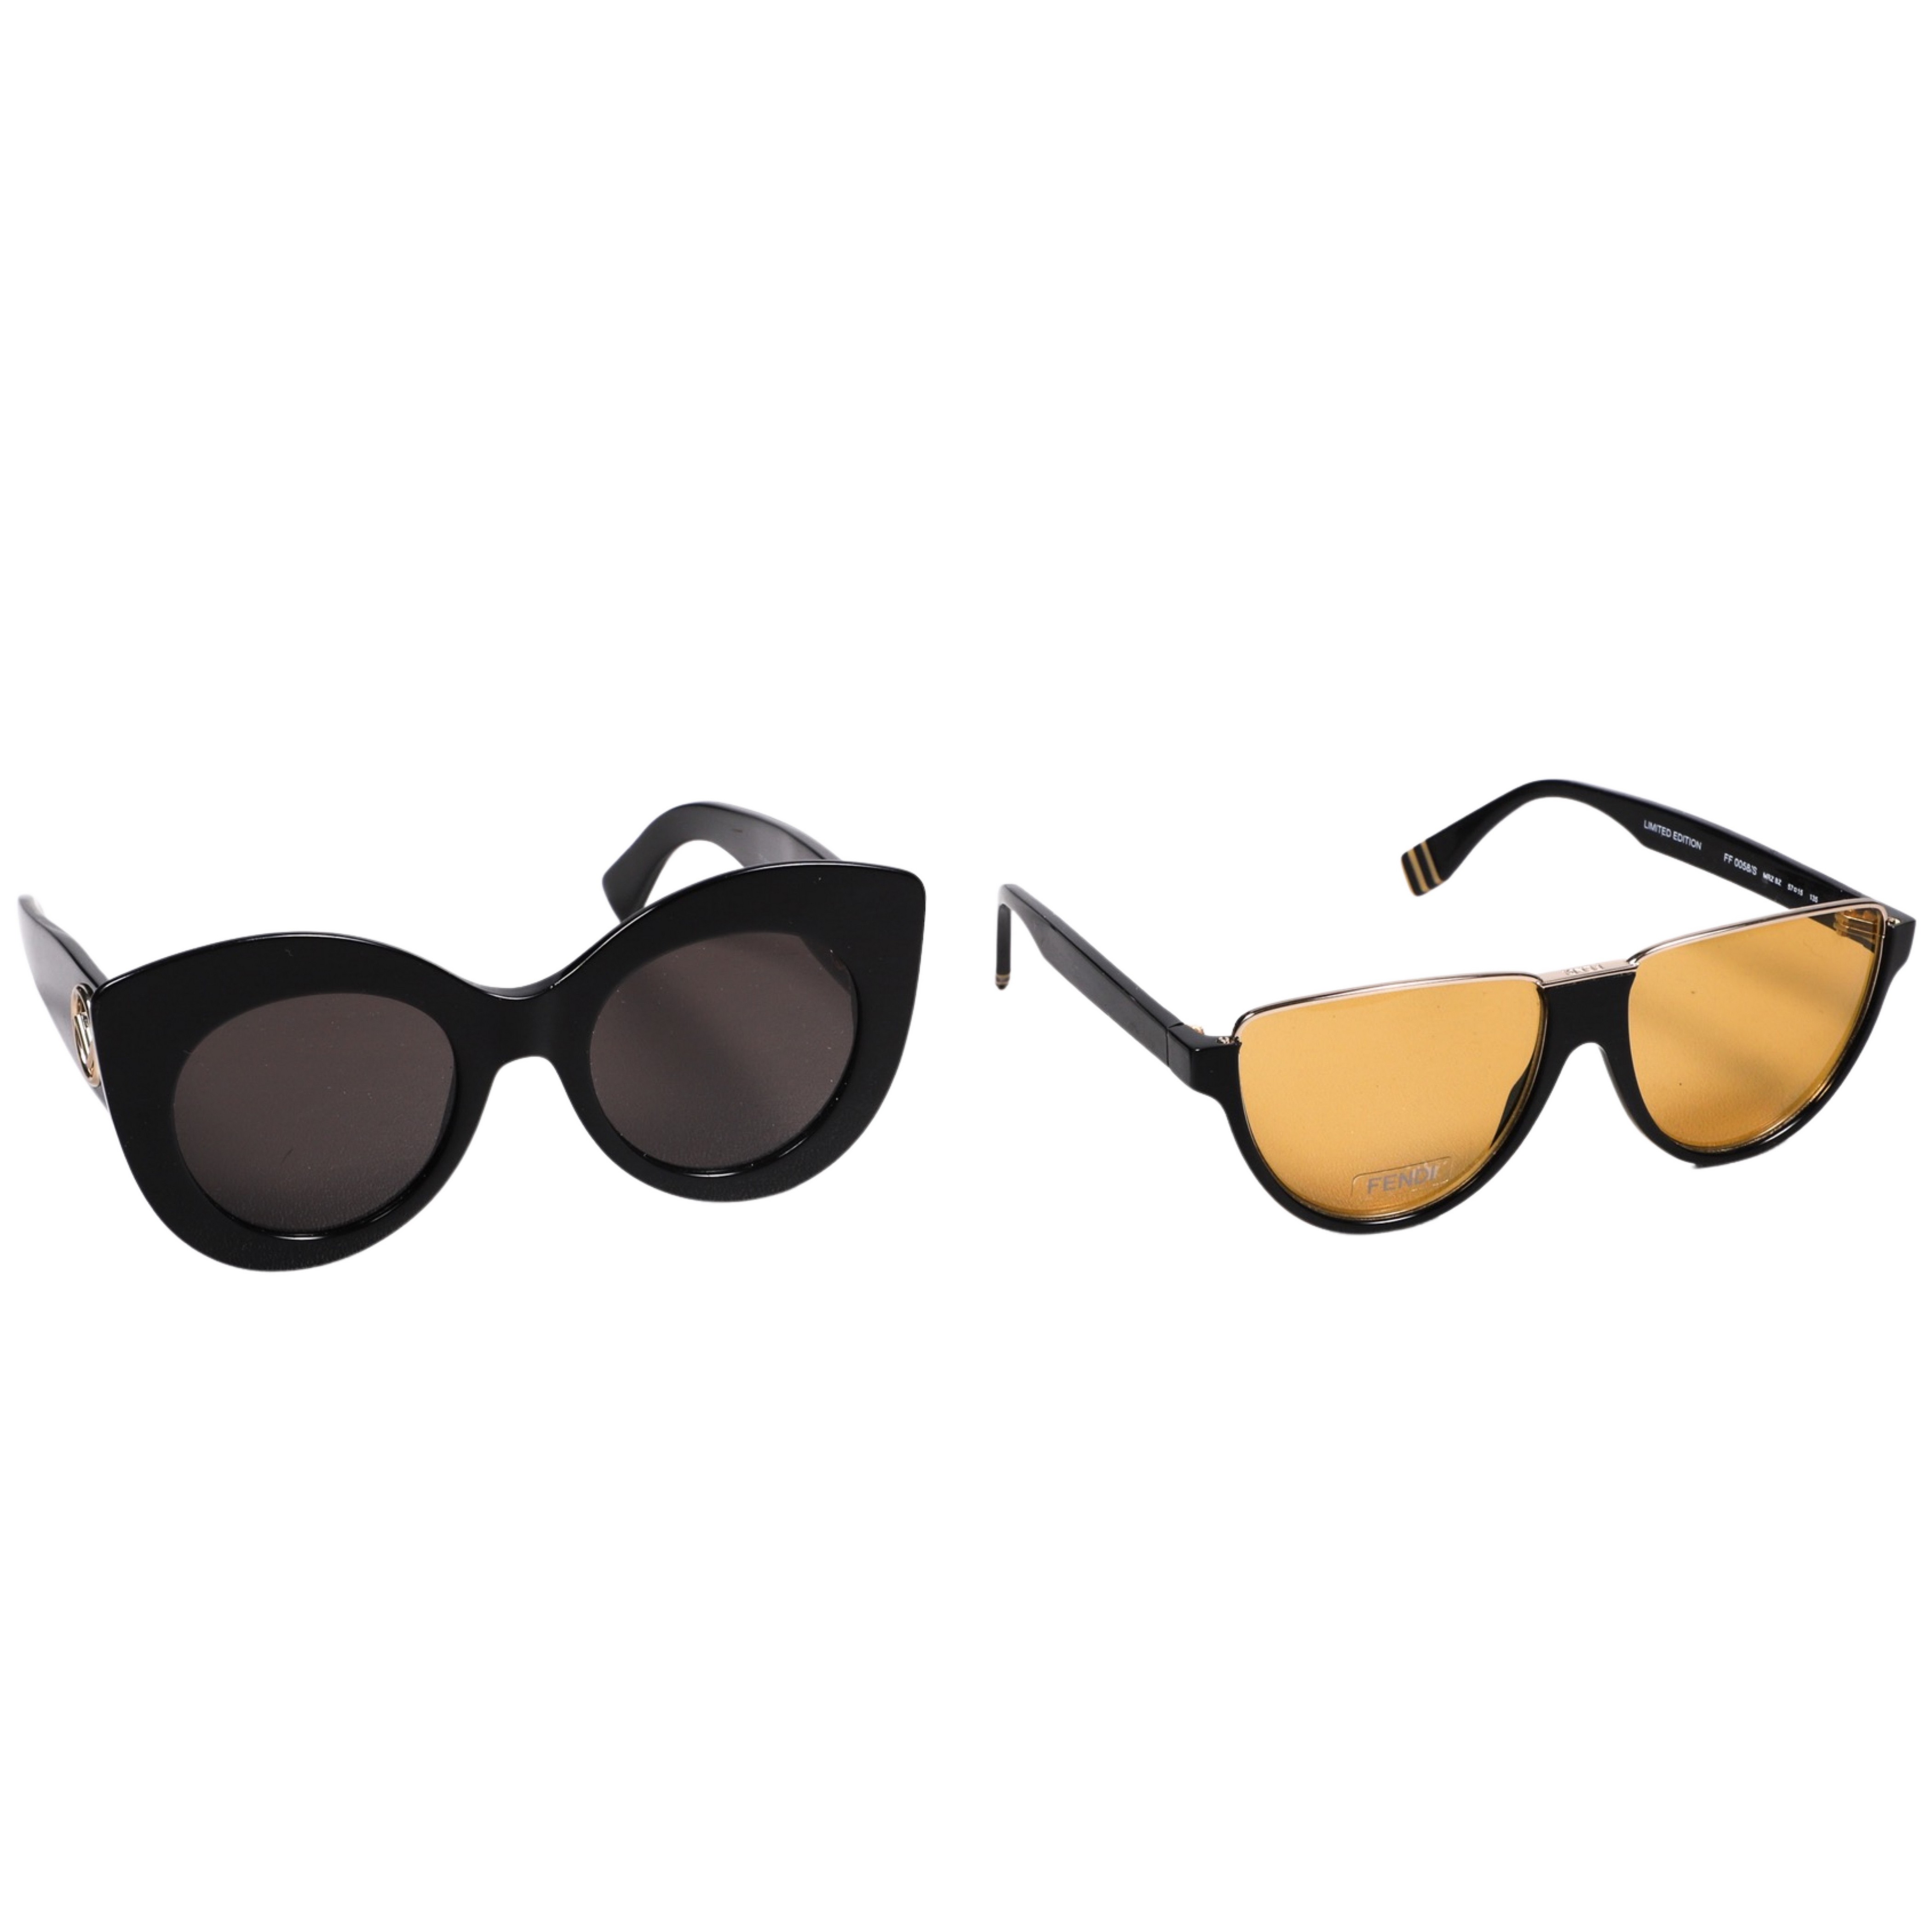  2 Pair Fendi sunglasses to include 3b48f7